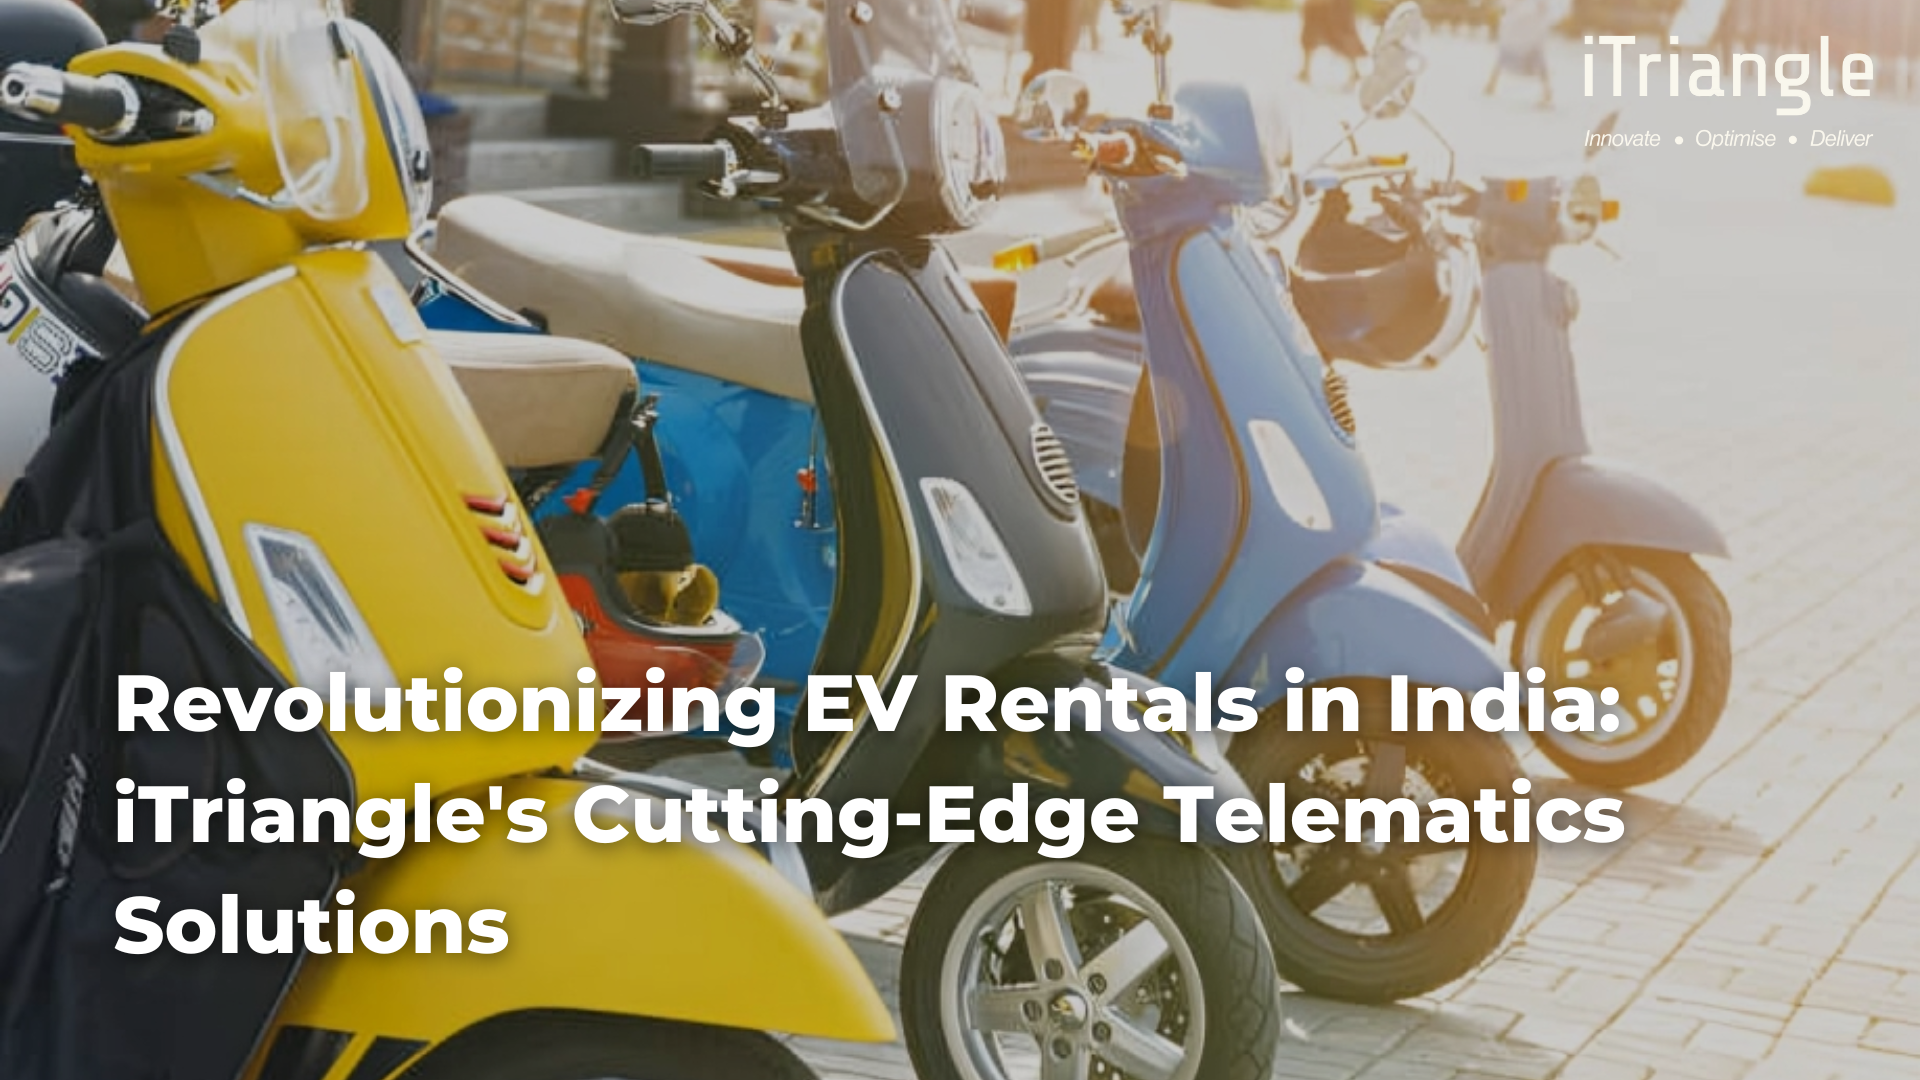 Revolutionizing EV Rentals in India: iTriangle’s Cutting-Edge Telematics Solutions